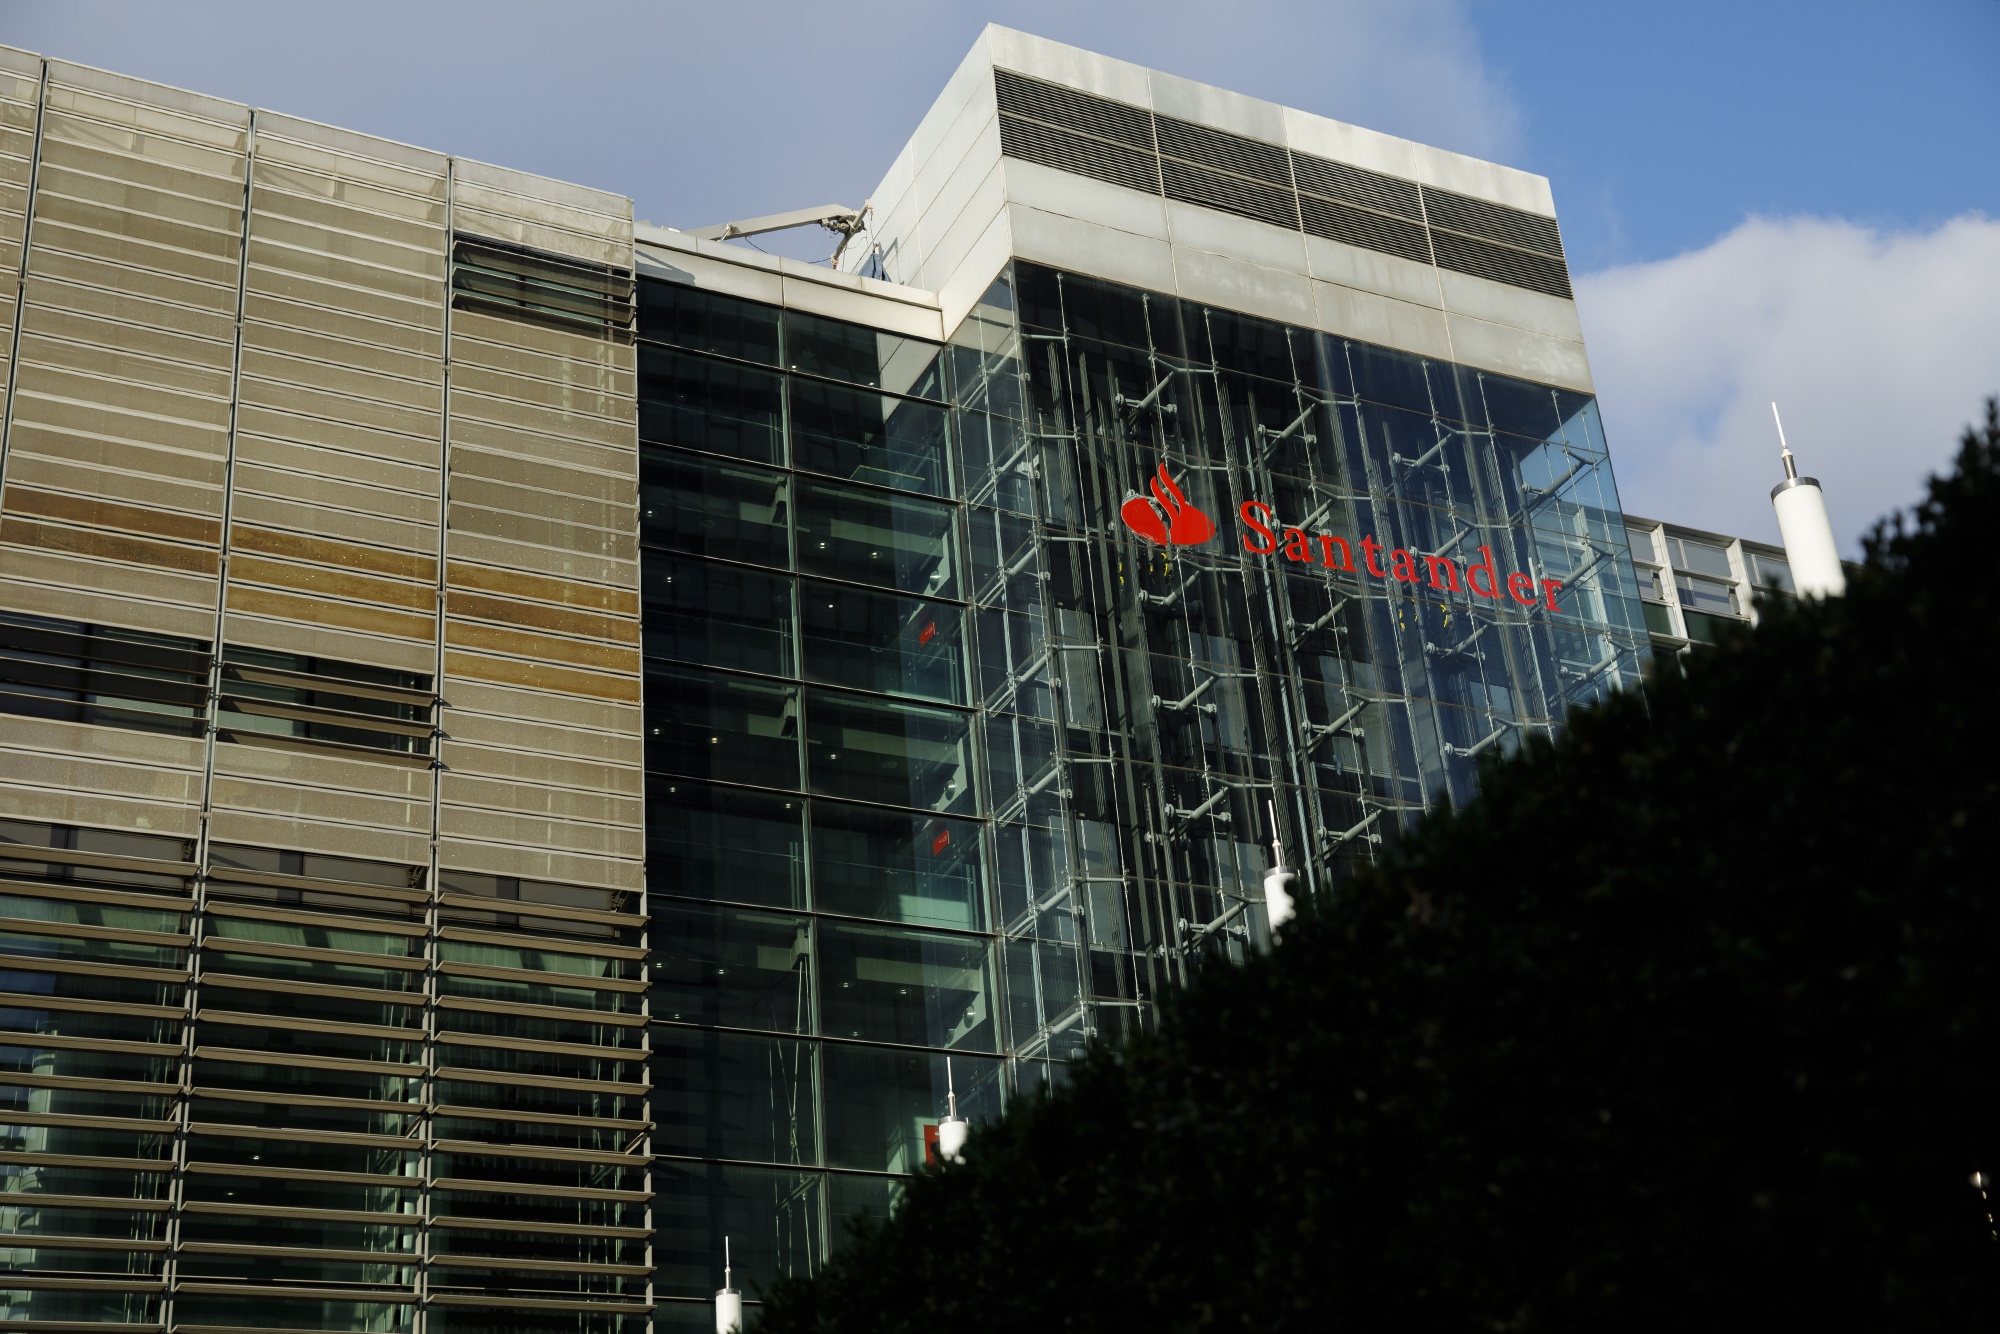 Santander UK fined £108m over anti-money laundering failings, Banco  Santander